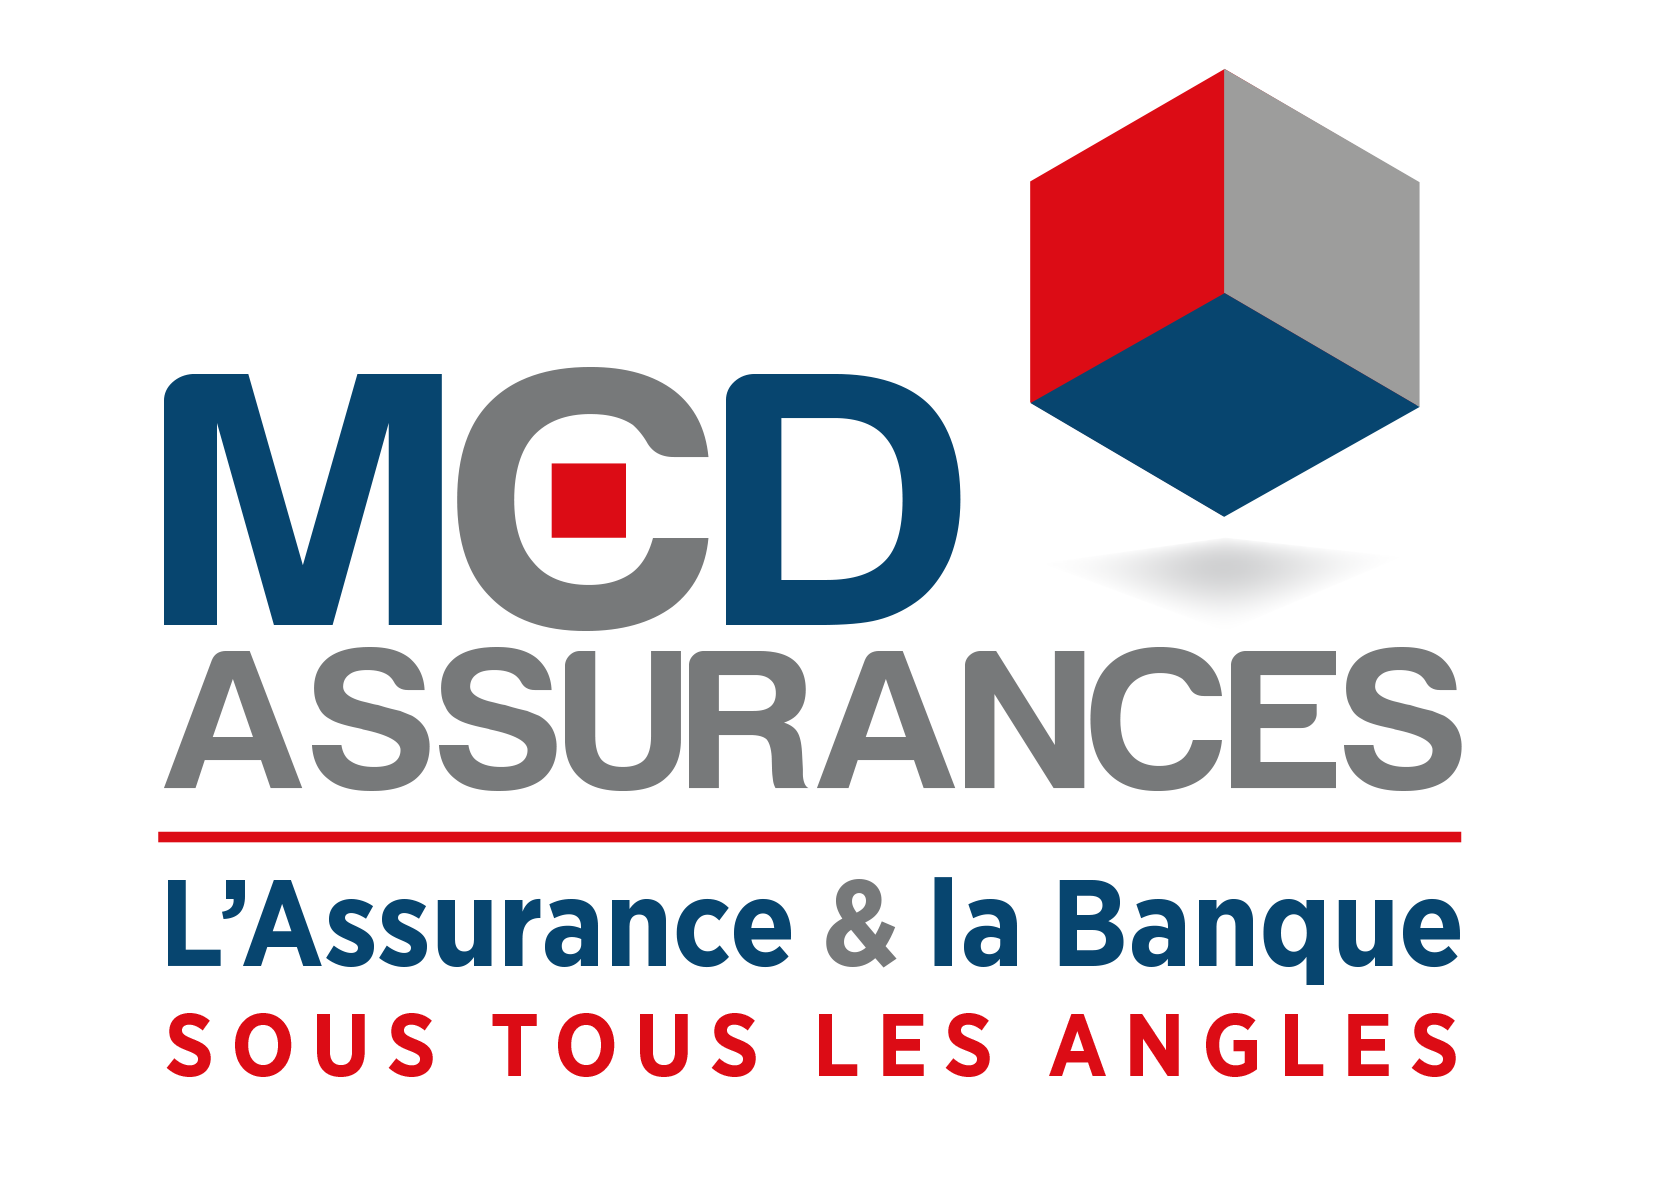 MCD Assurances